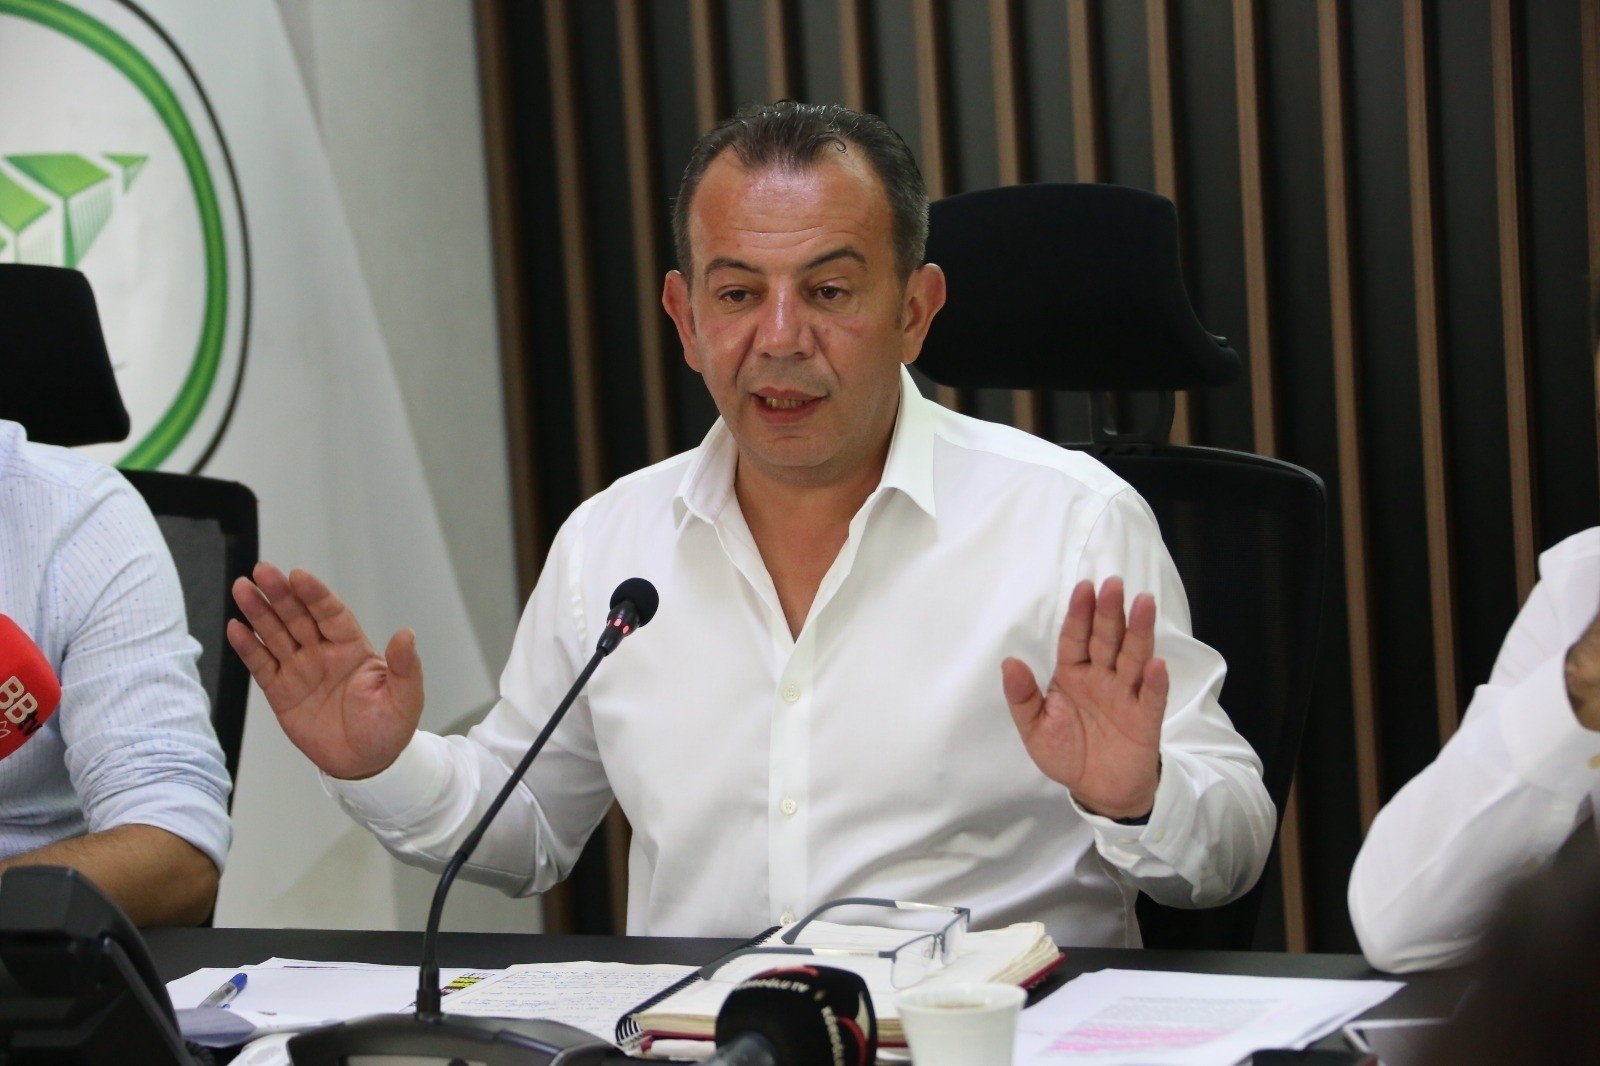 Bolu Mayor Tanju Özcan speaks at a press conference, Bolu, northern Turkey, July 26, 2021. (IHA Photo)